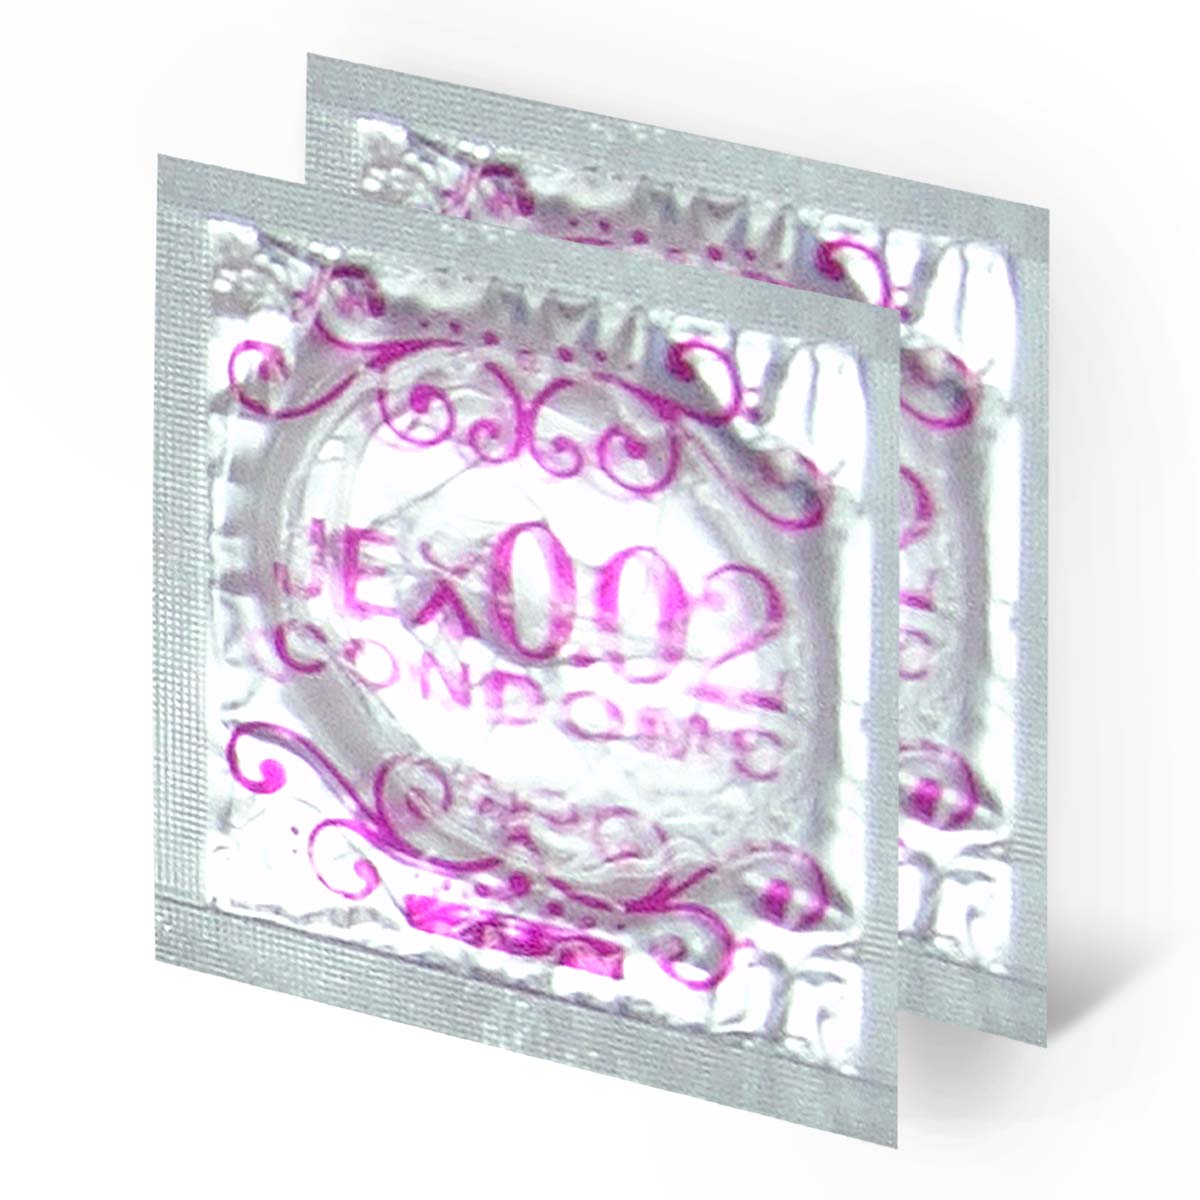 JEX iX 0.02 L-size 2 pieces PU Condom-p_1